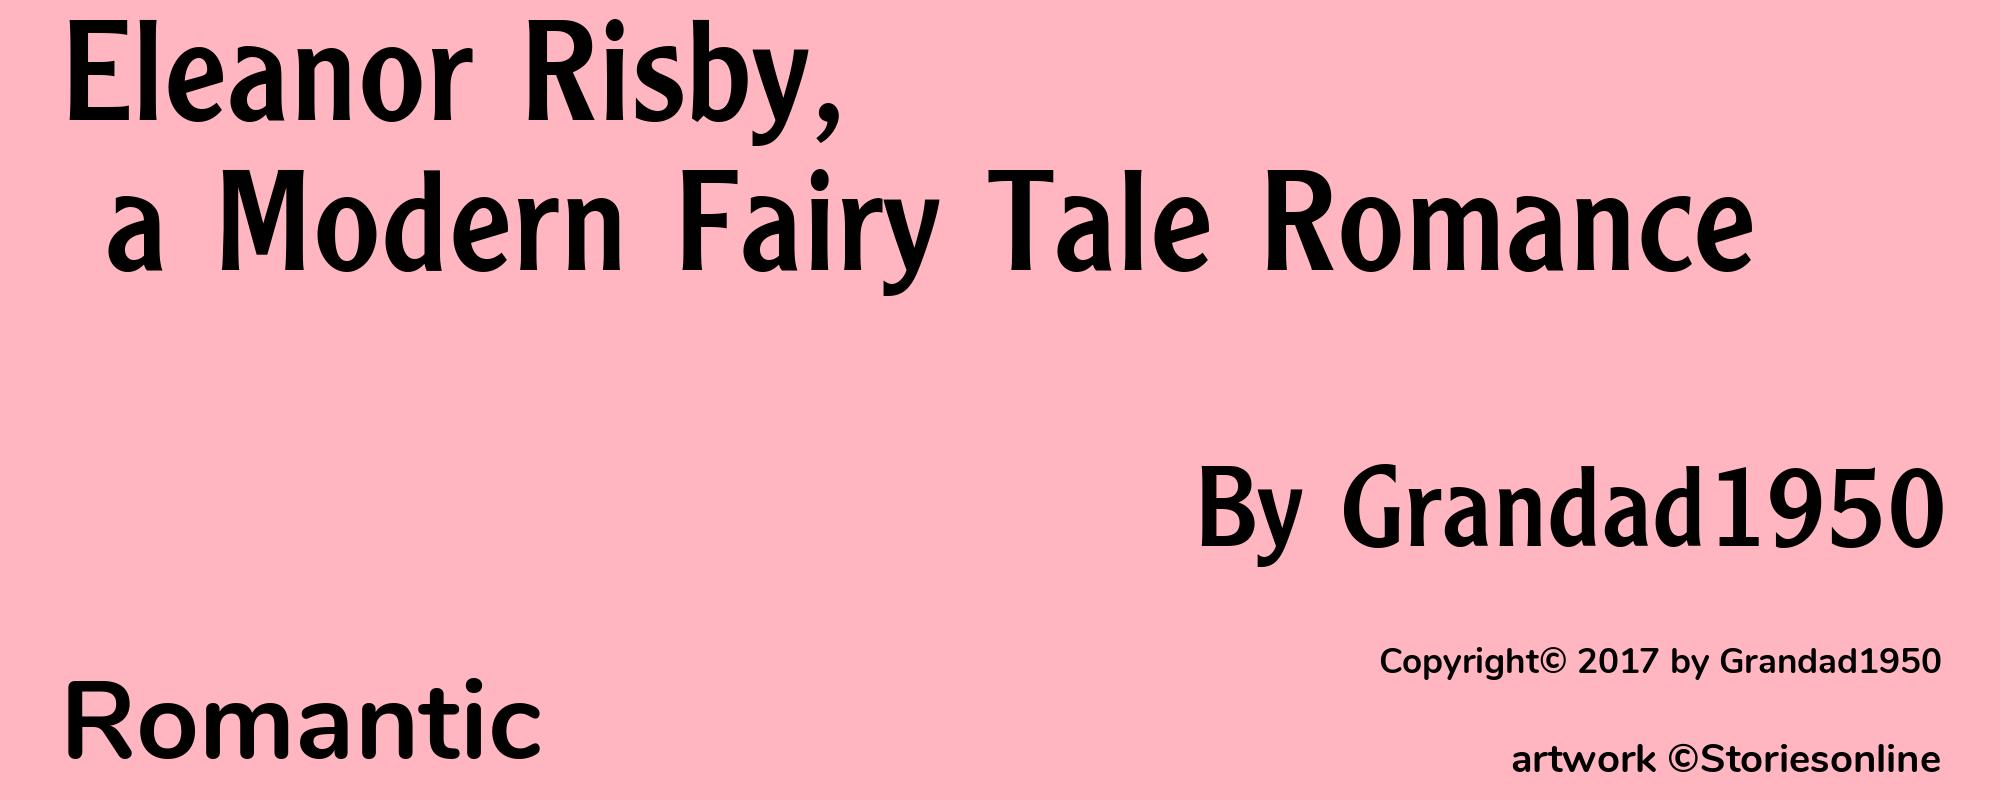 Eleanor Risby, a Modern Fairy Tale Romance - Cover